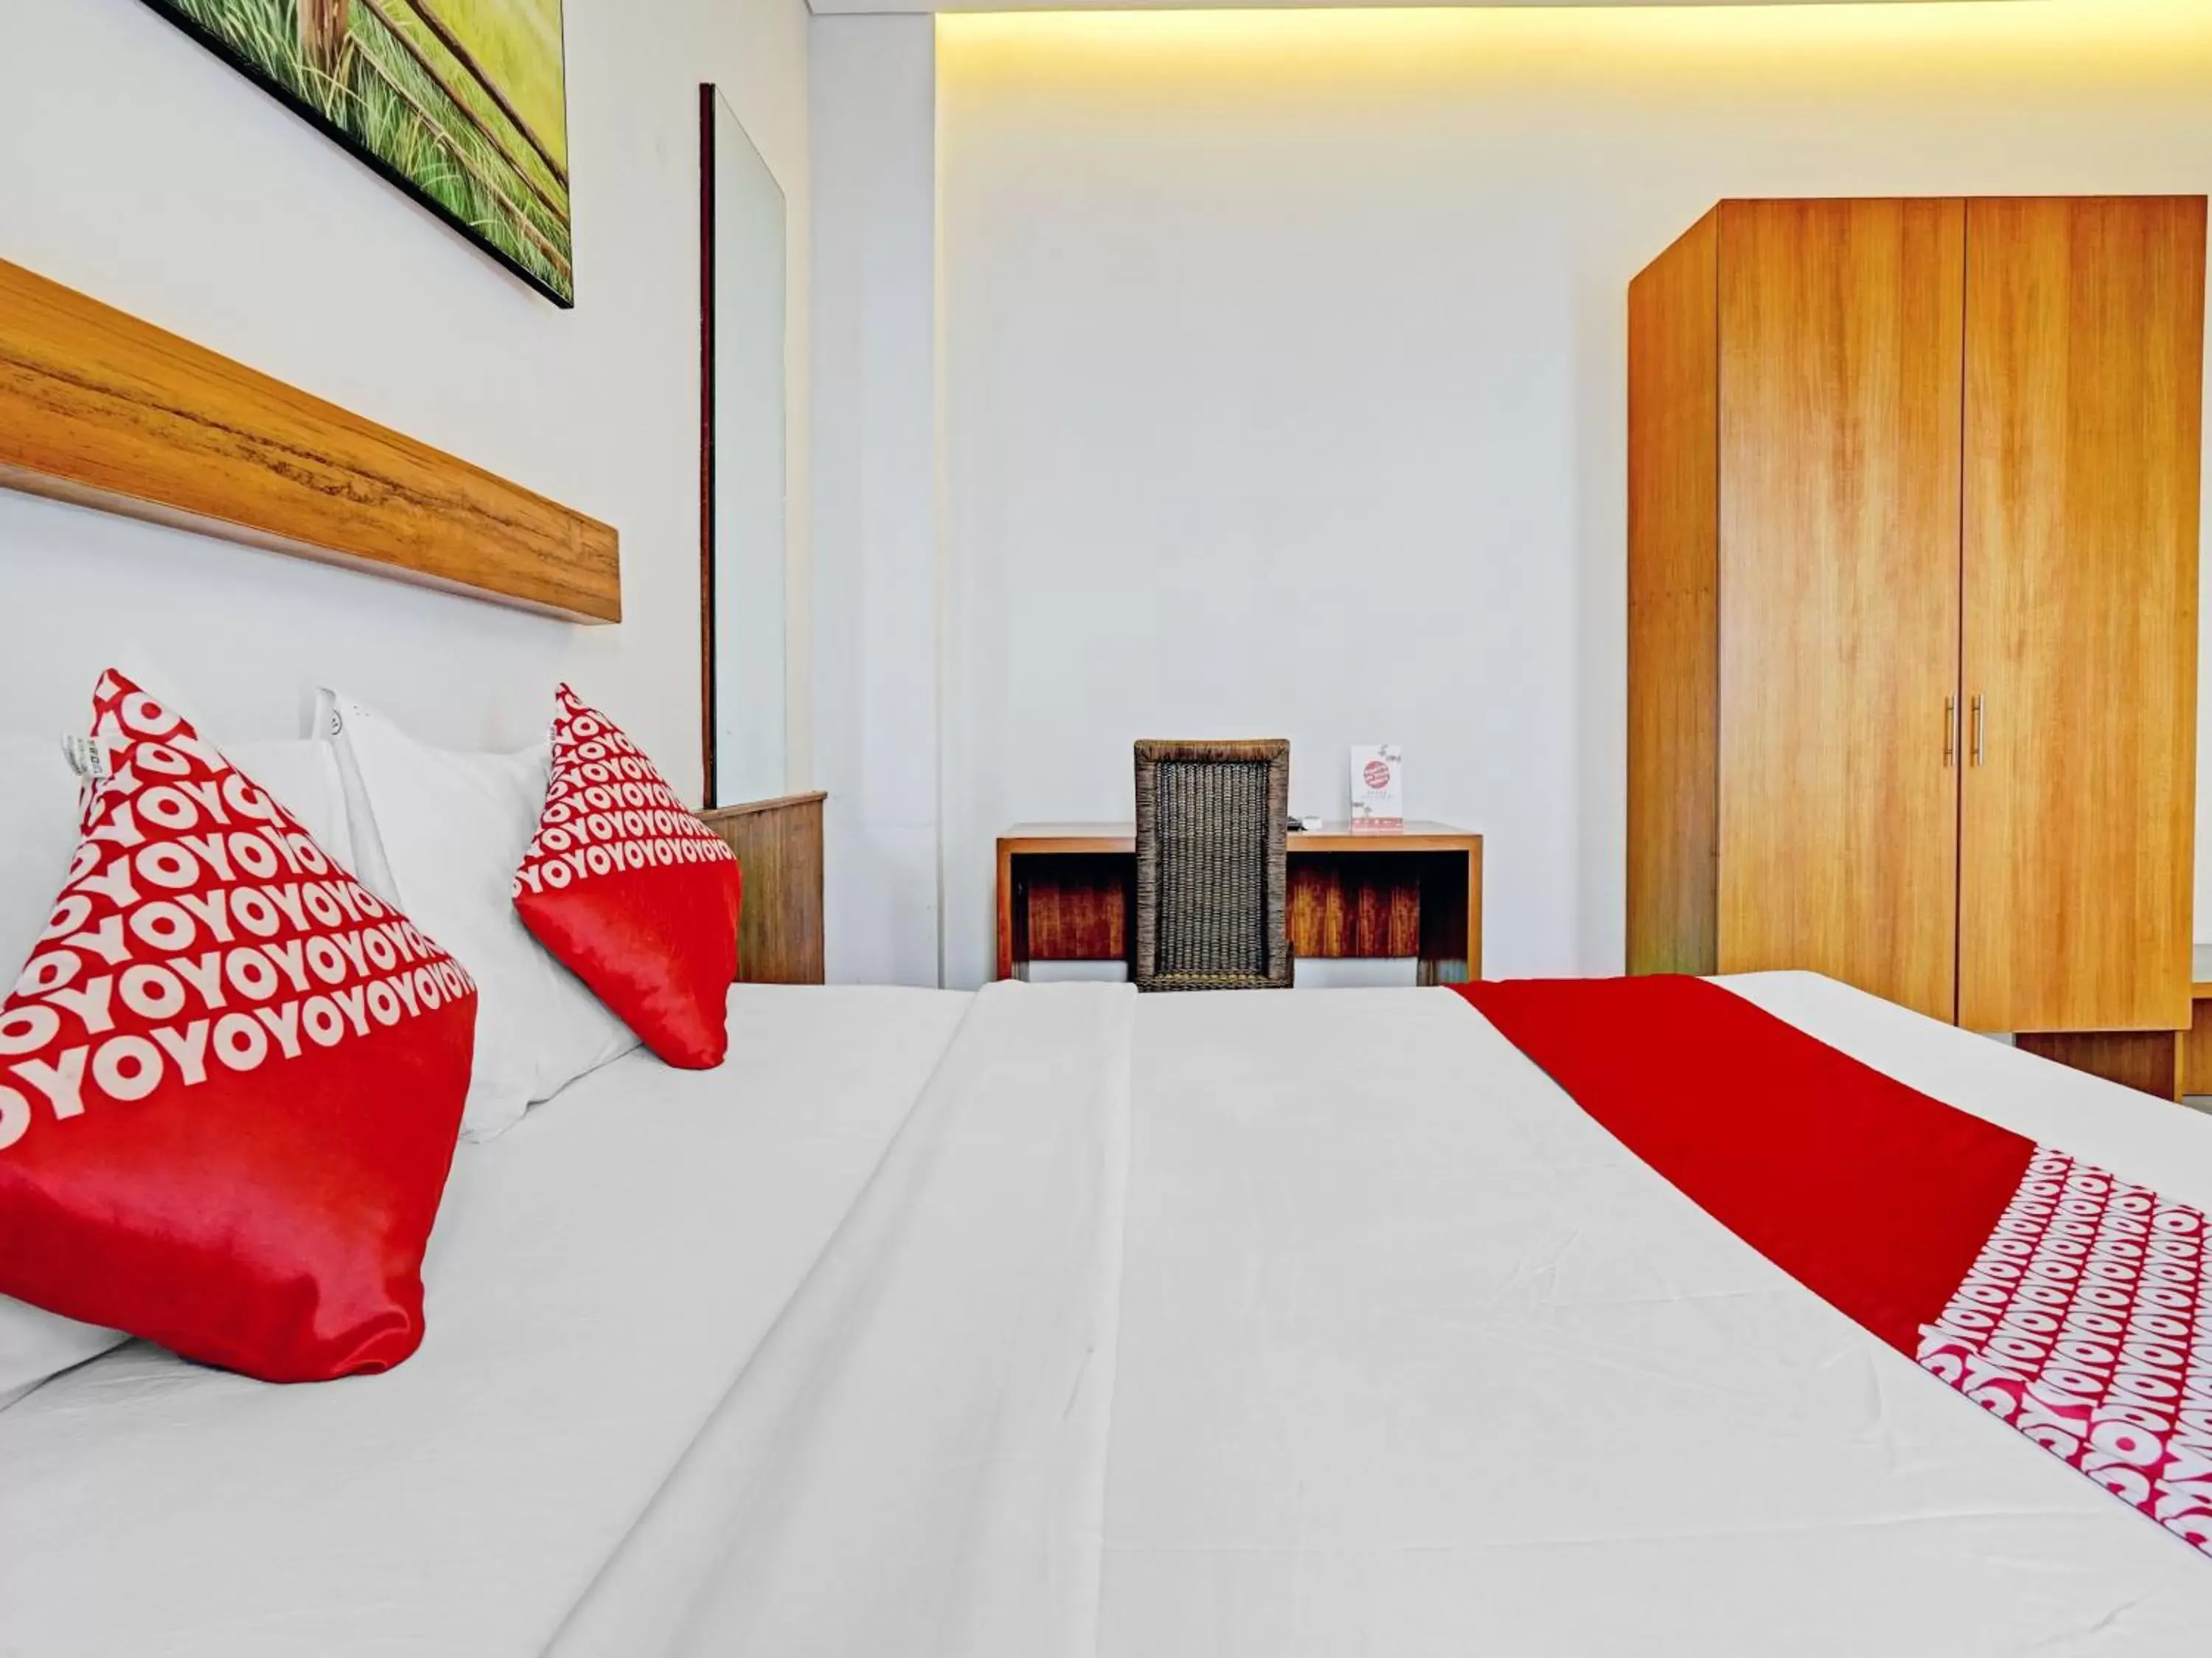 Bedroom in Flagship 90501 Hotel Montameri